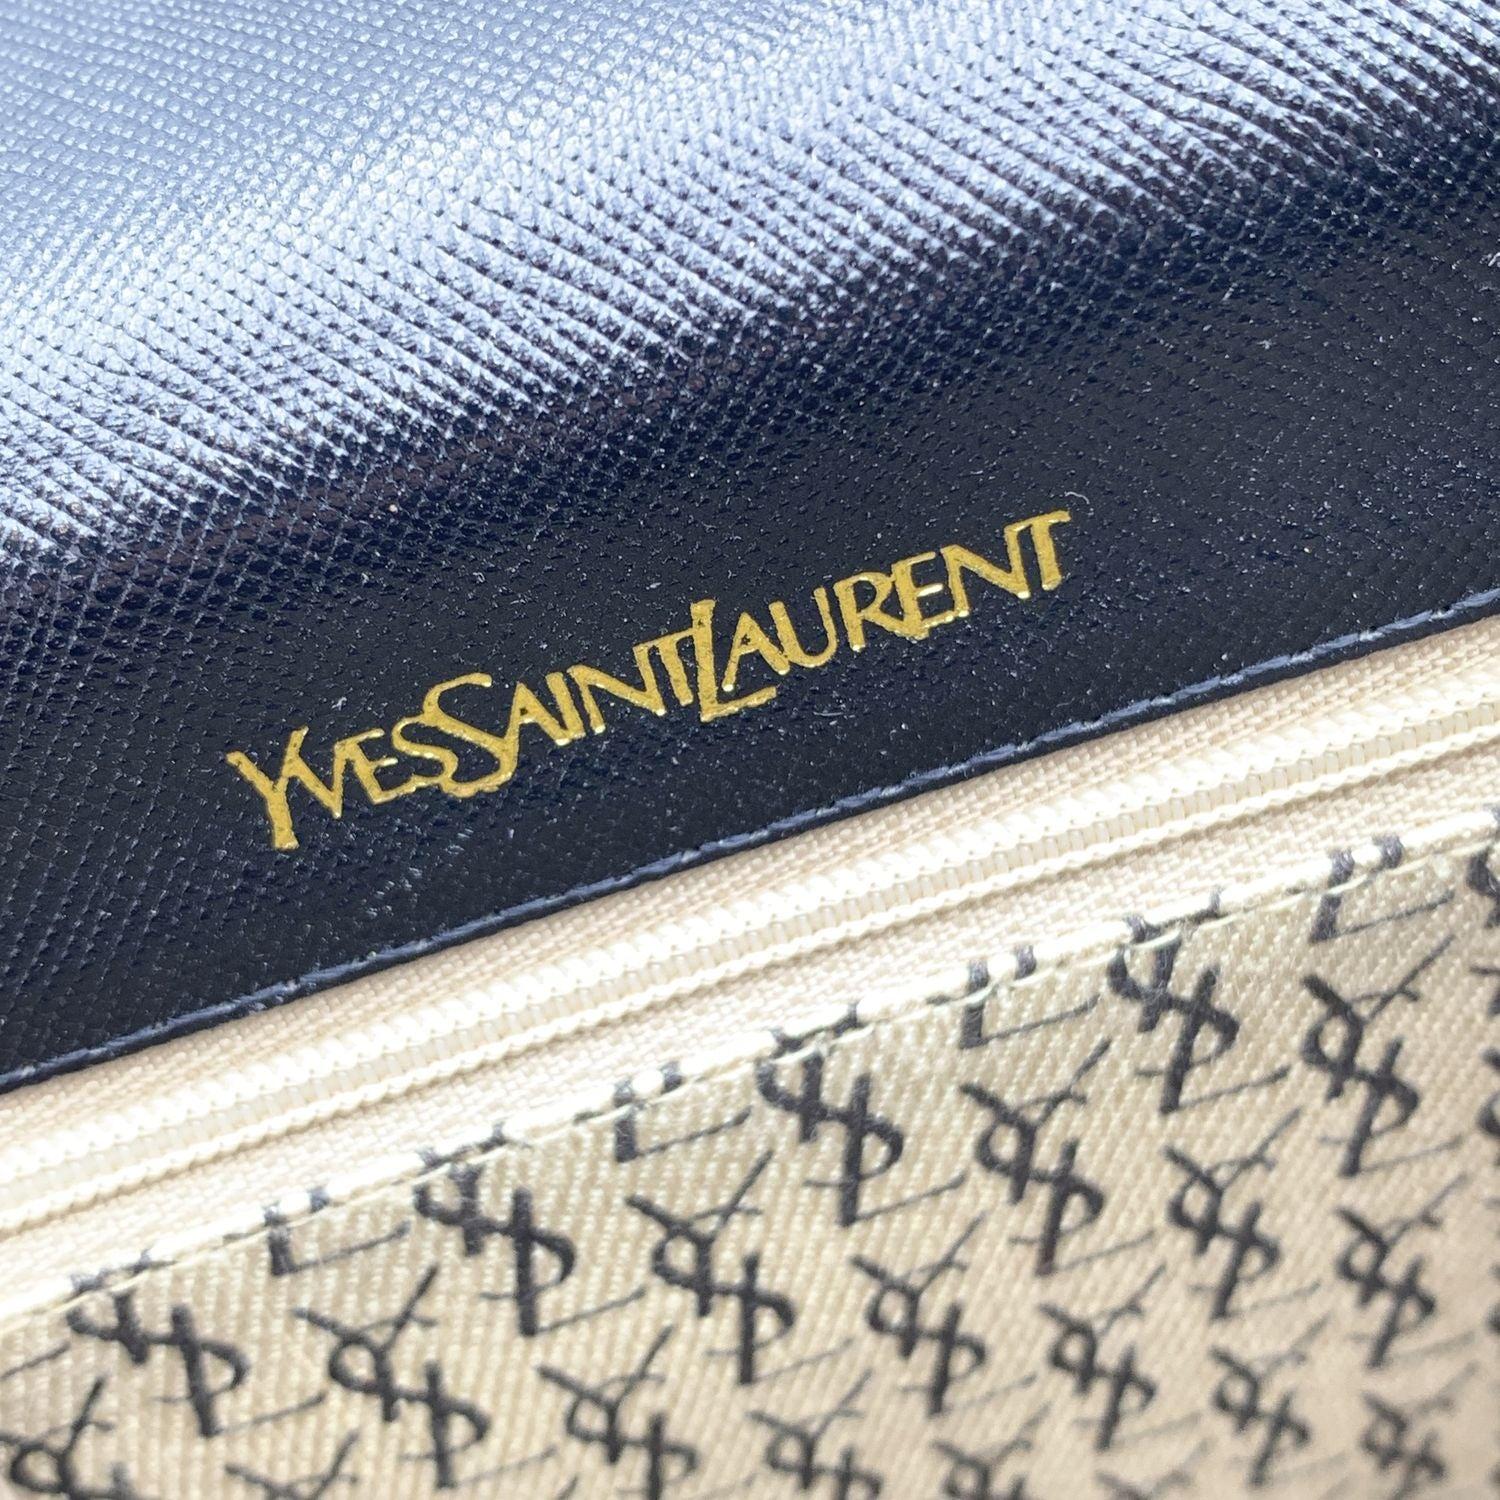 Yves Saint Laurent Vintage Black Leather Small Messenger Crossbody Bag 1